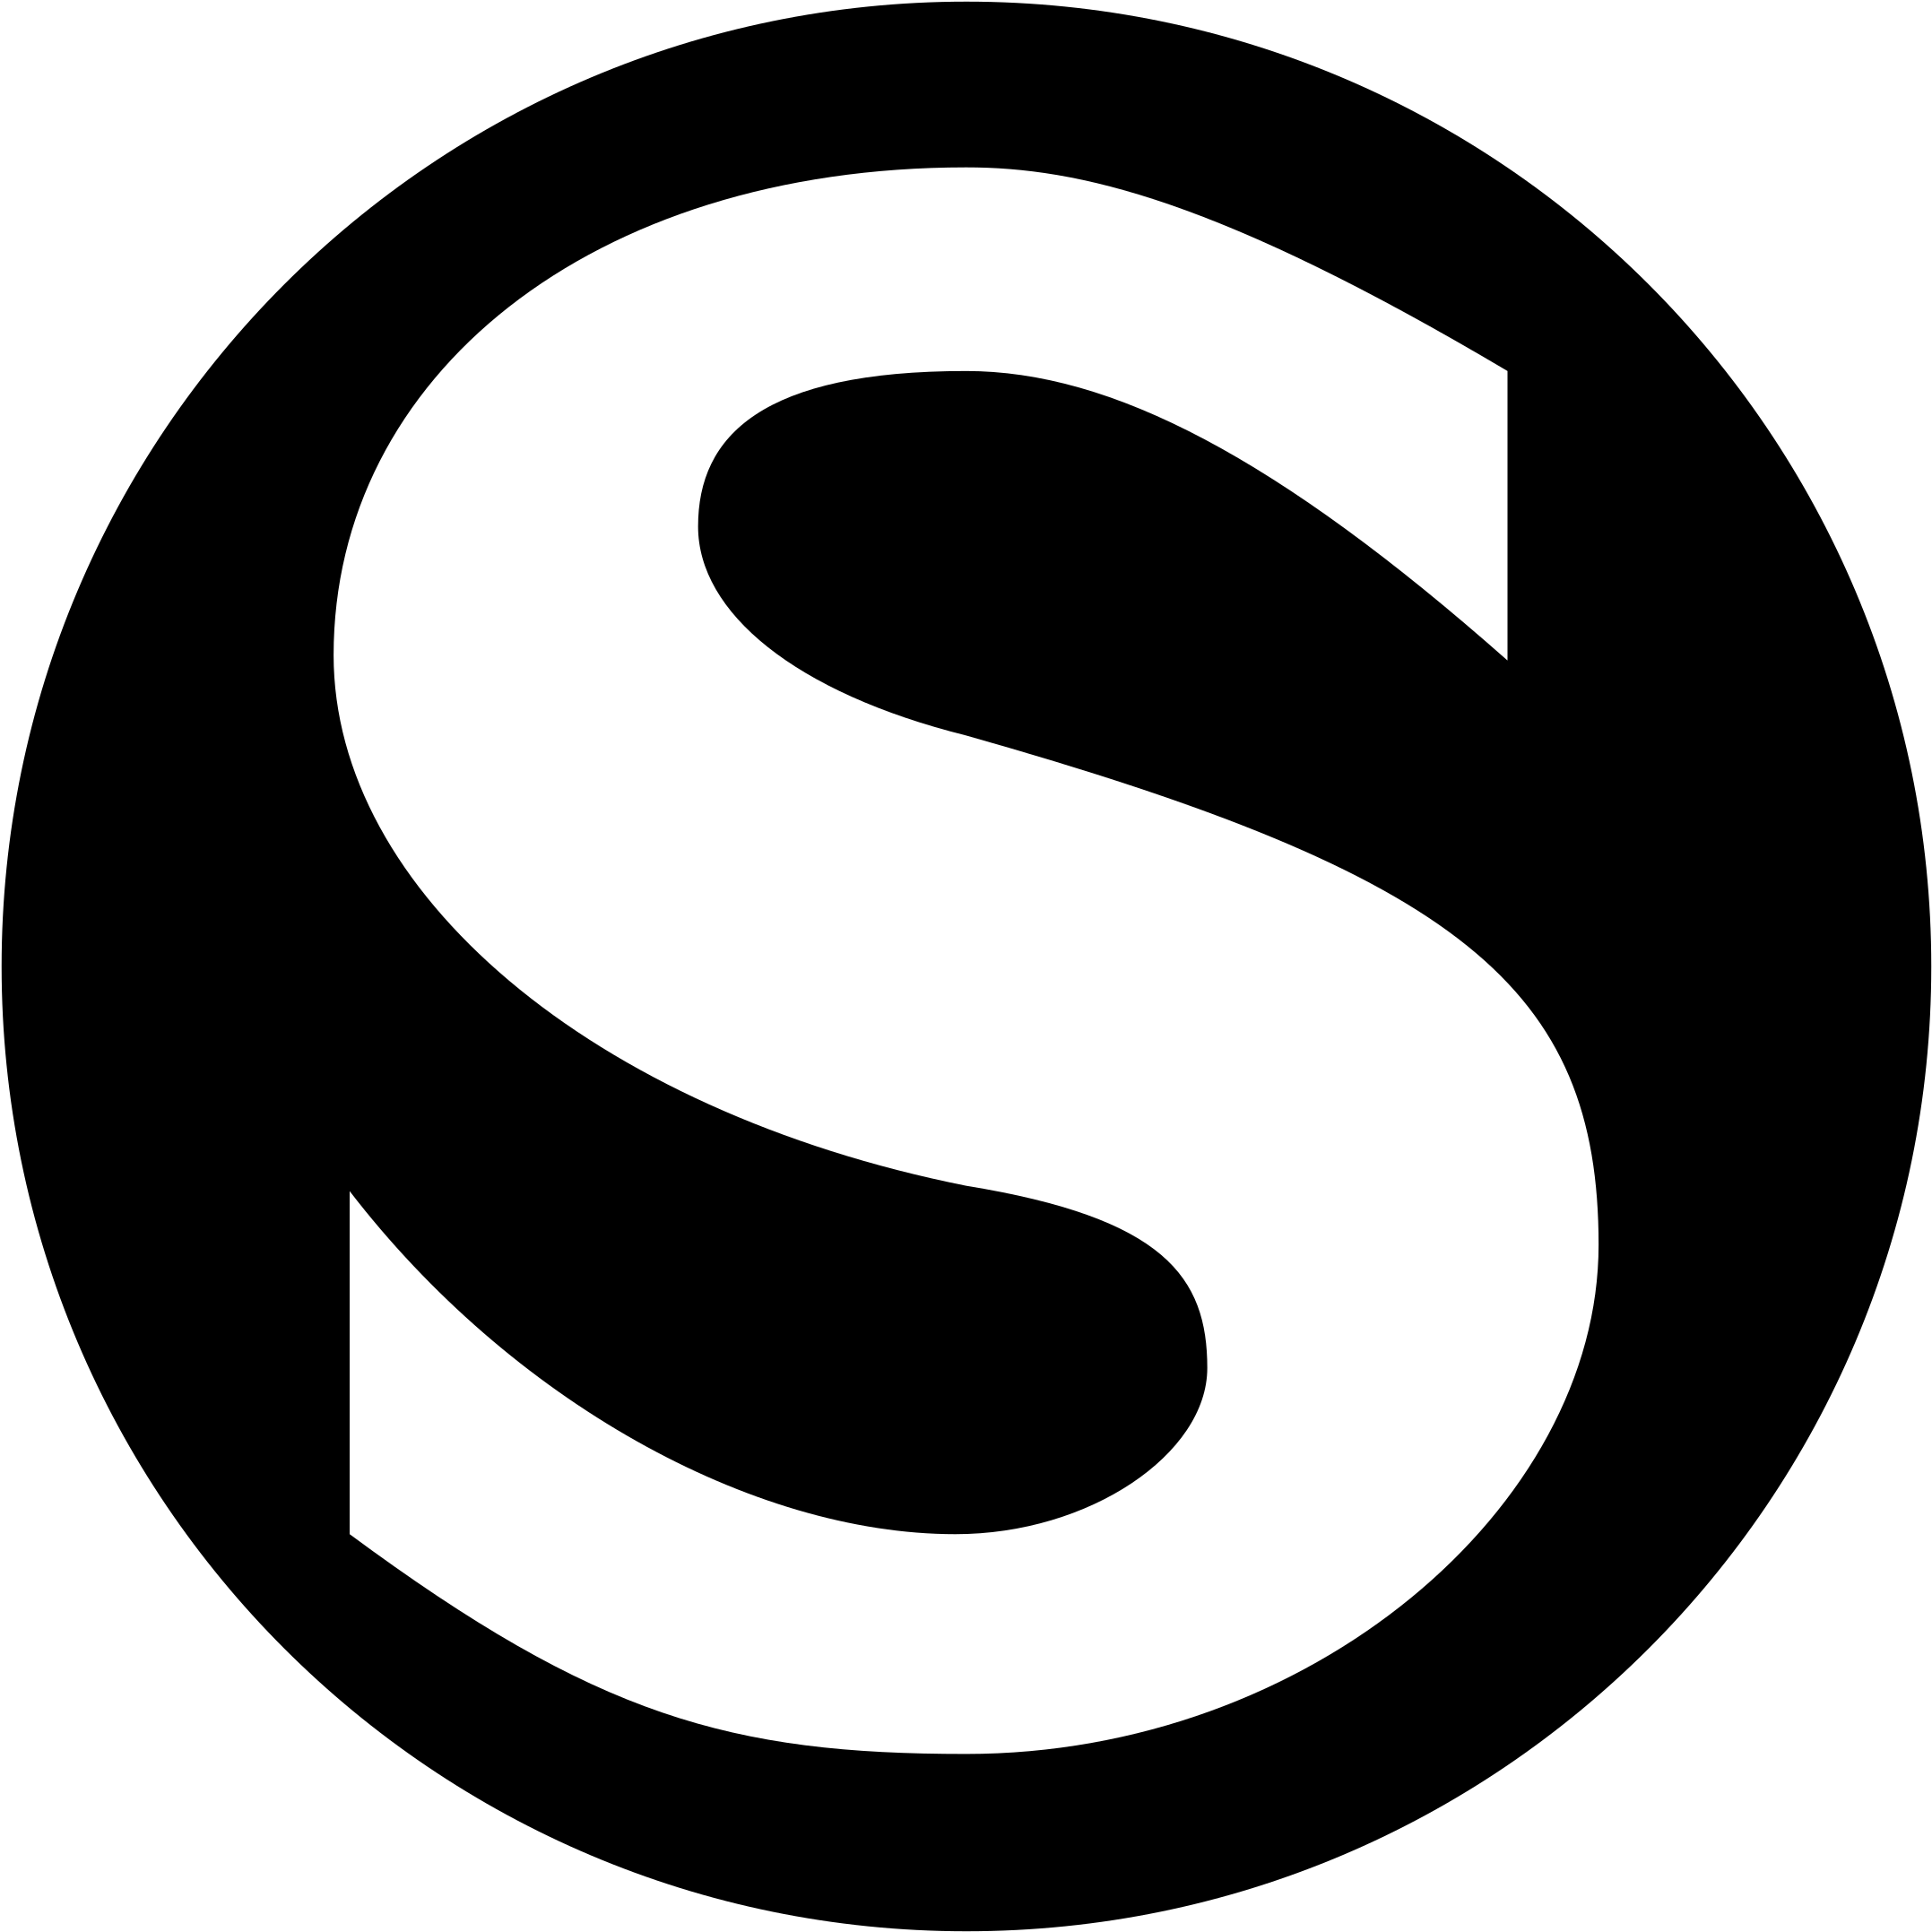 Значок s. Эмблема с буквой s. Буква s в круге. Буква s черная.